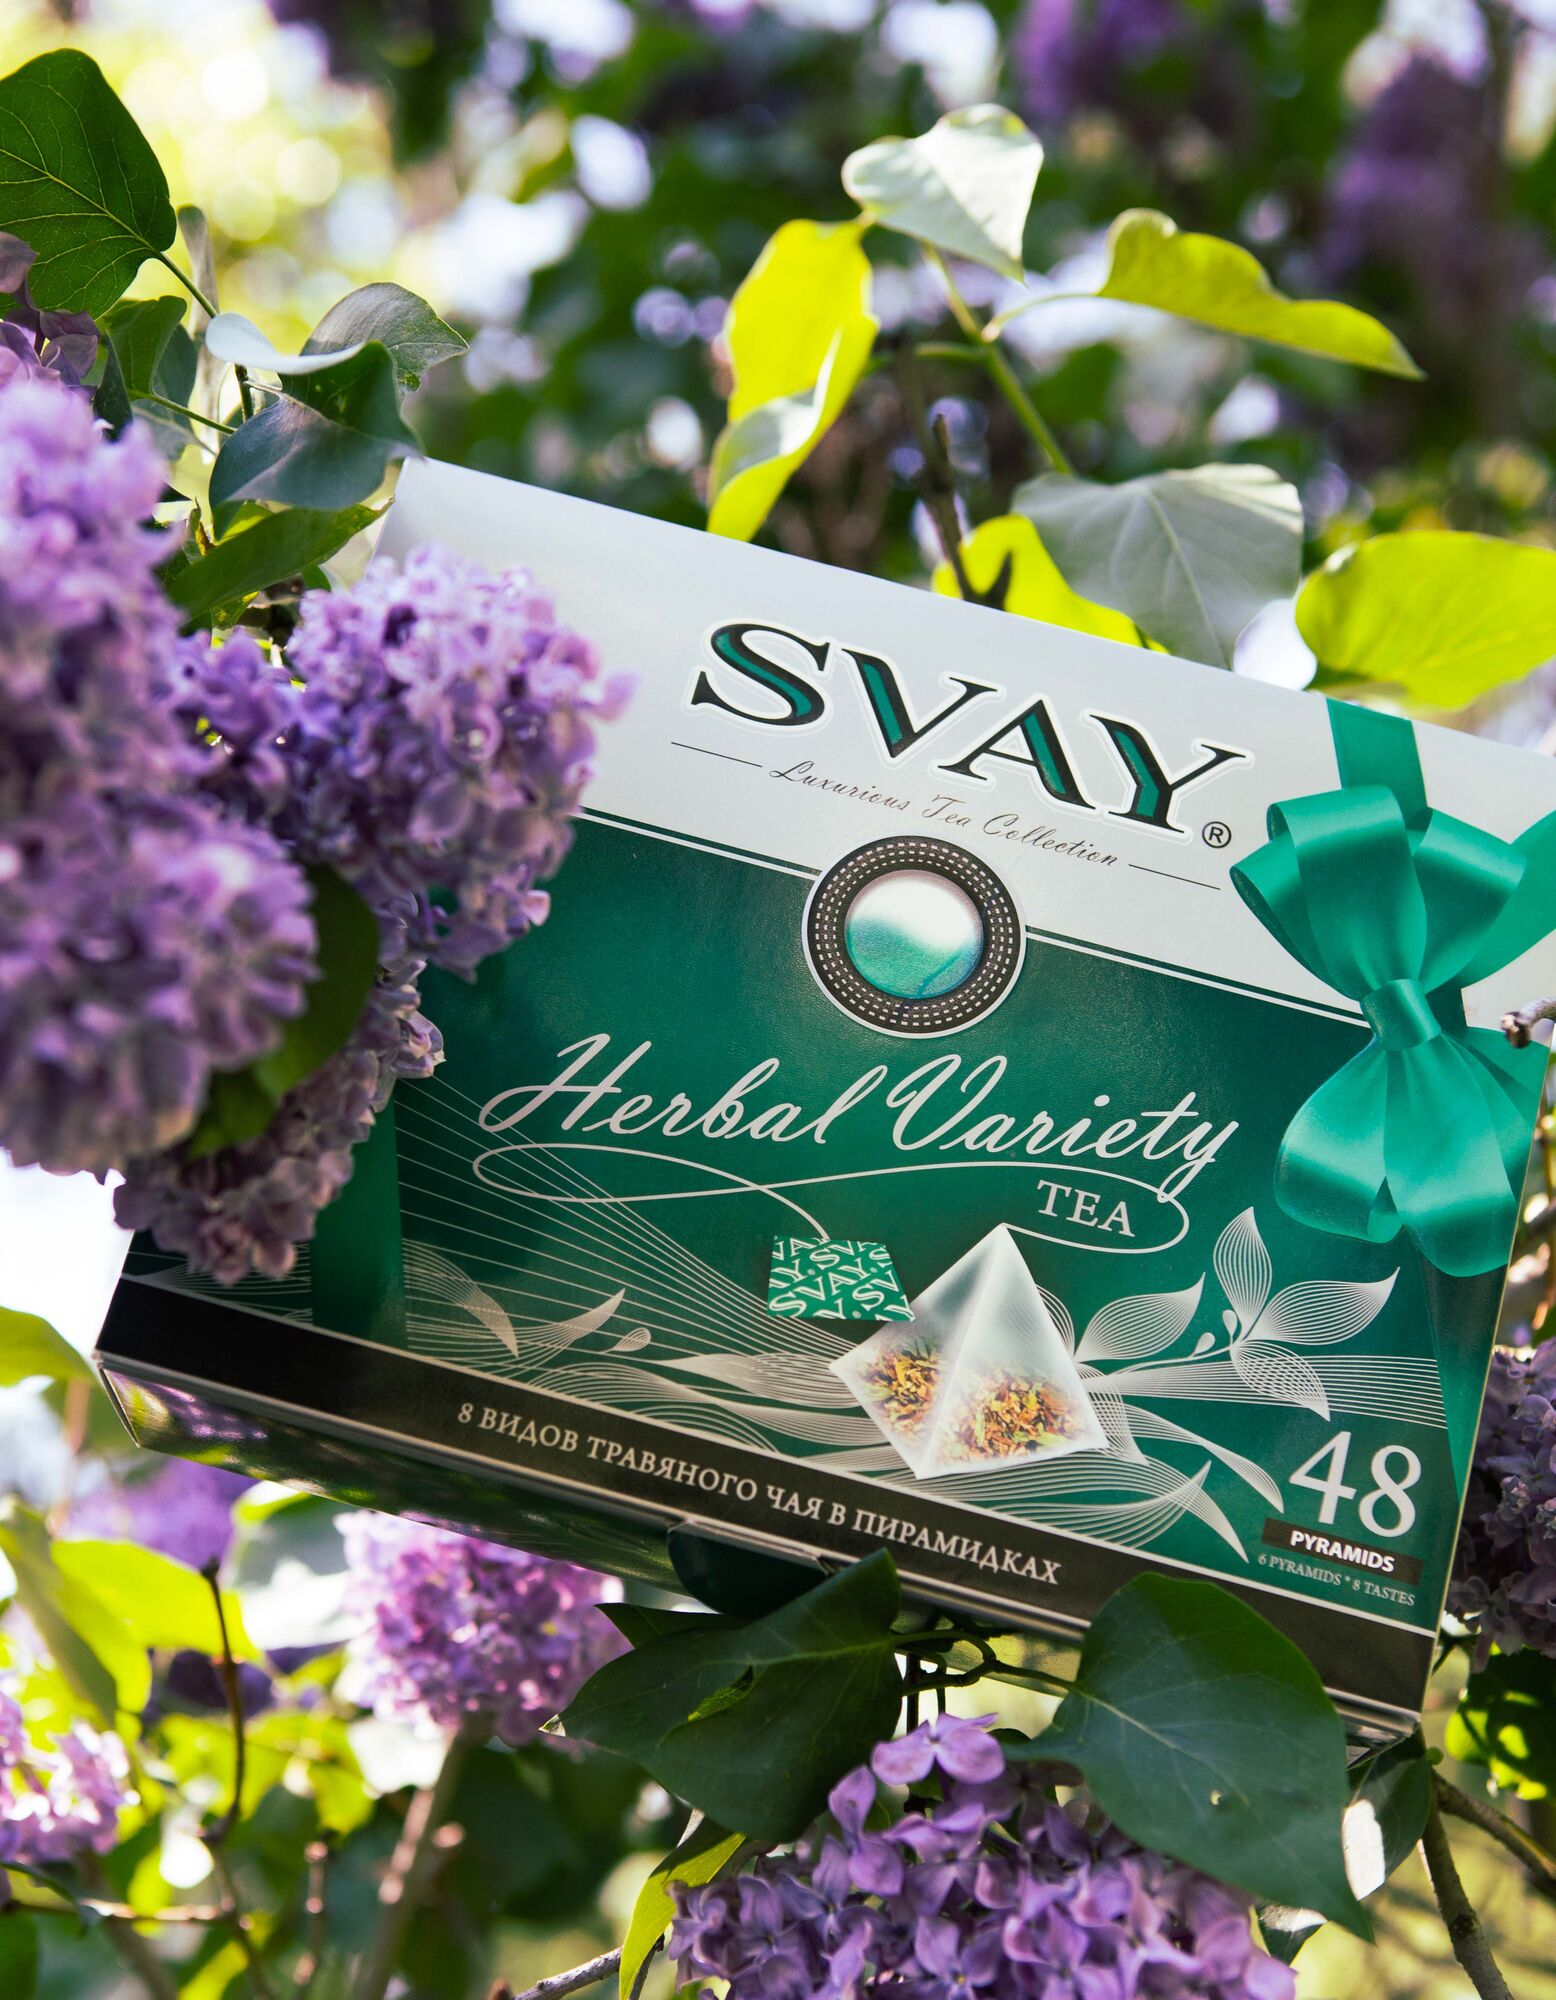 Чай SVAY Herbal Variety травяной 48 пирамидок (в коробке 6 шт)